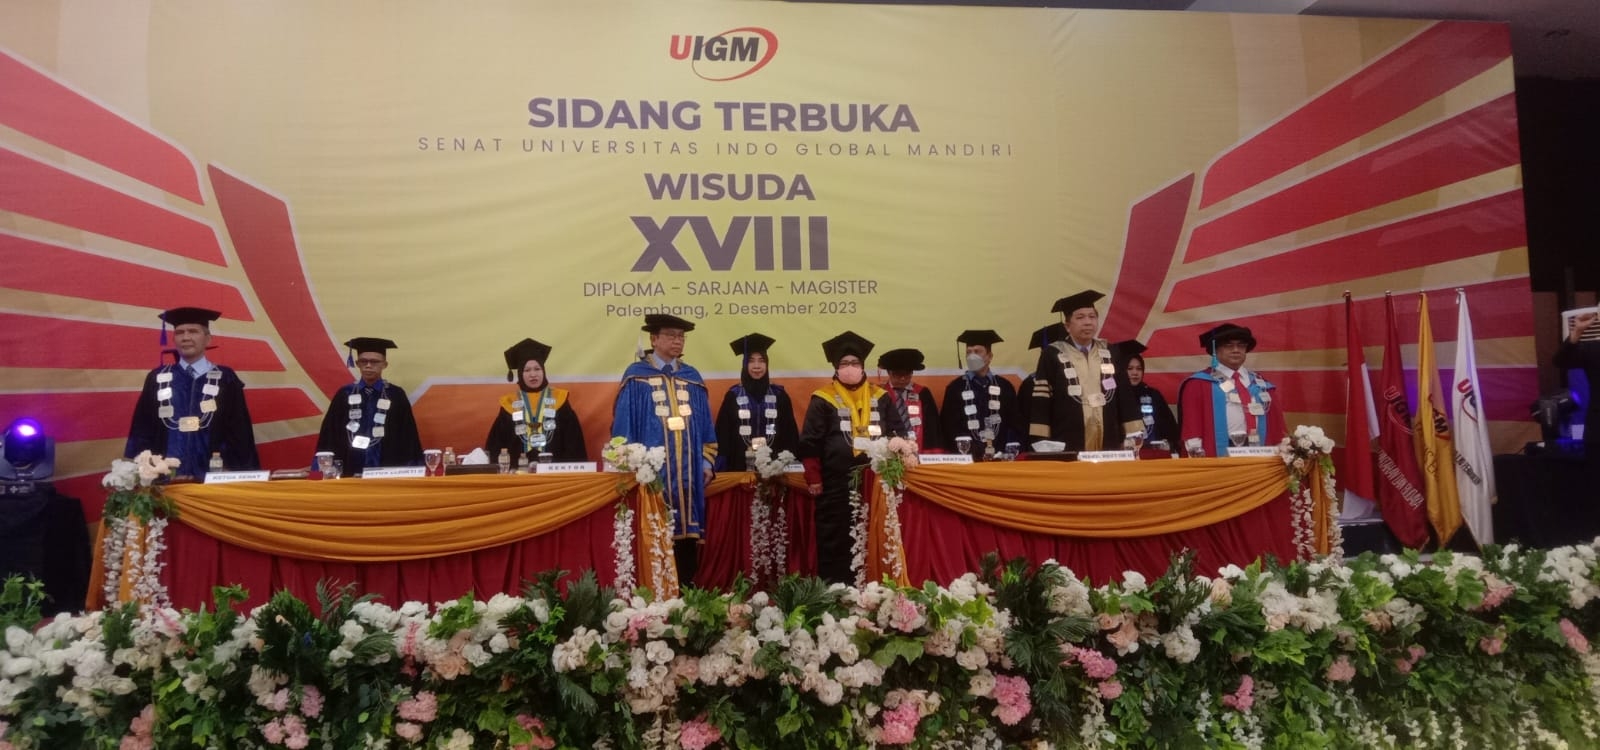 379 Mahasiswa Universitas Indo Global Mandiri Mengikuti Wisuda XVIII, Marzuki Alie: Selalu Jaga Almamater